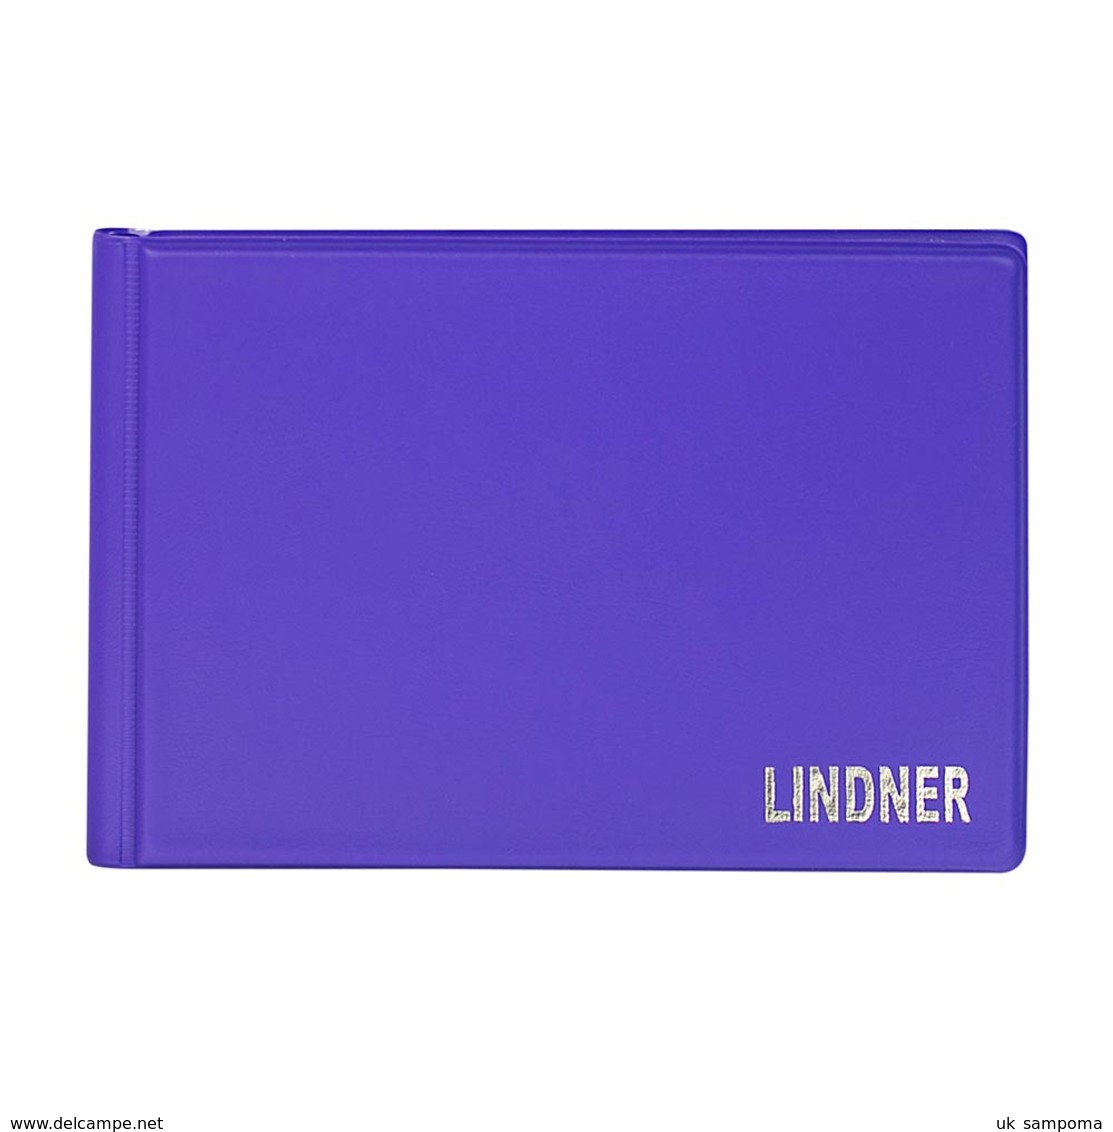 Lindner 2070-13 Pocket Coin Album For 48 Coins, 150 X 100 X 18 Mm, VIOLOA (violet) - Material